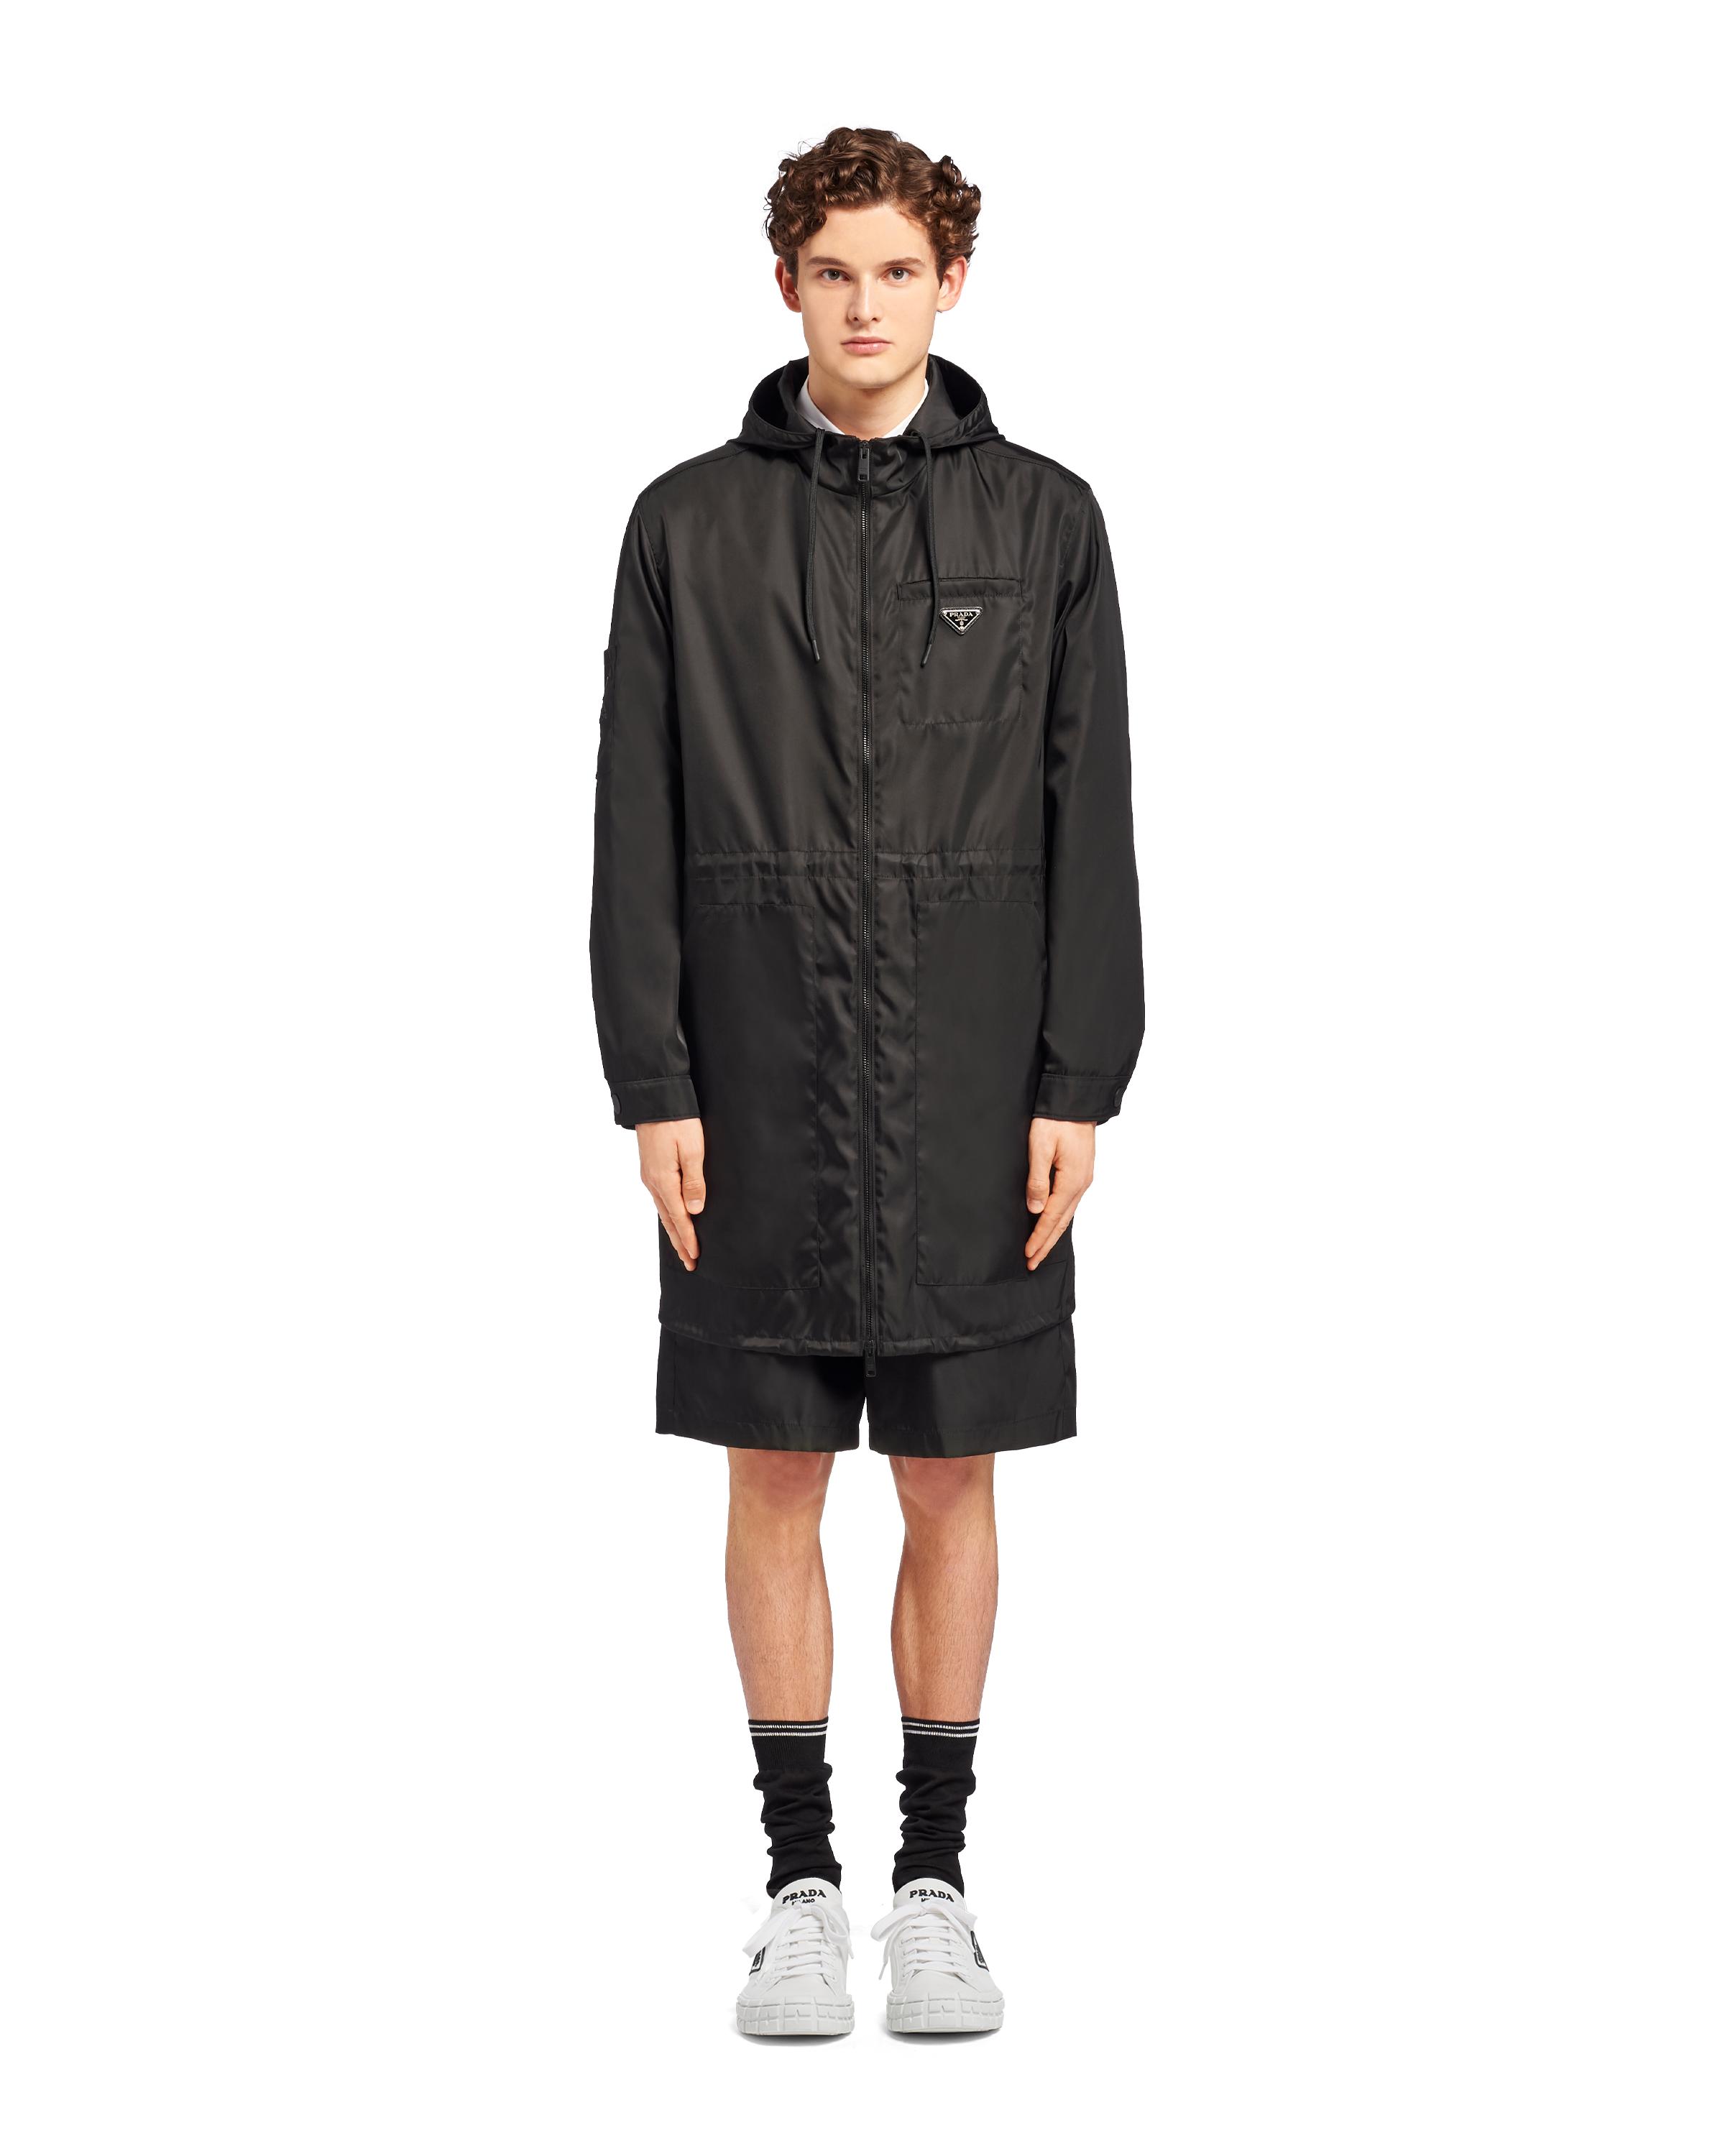 Prada Synthetic Re-nylon Raincoat in Black for Men - Lyst